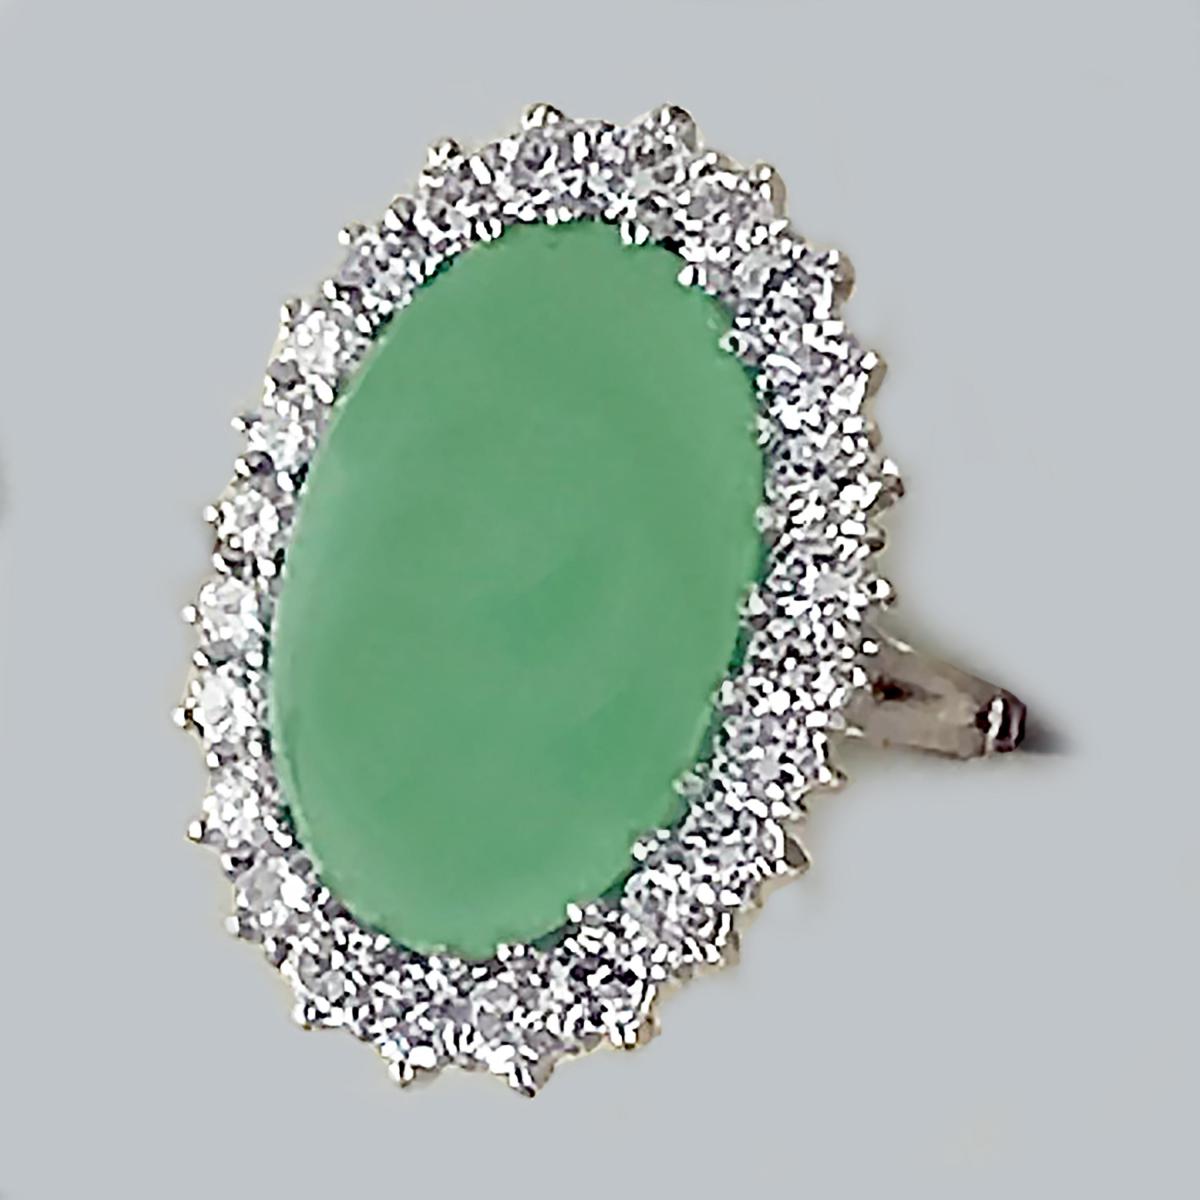 Certified Natural Cabochon Cut Jade and Diamond Ring, Circa 1970